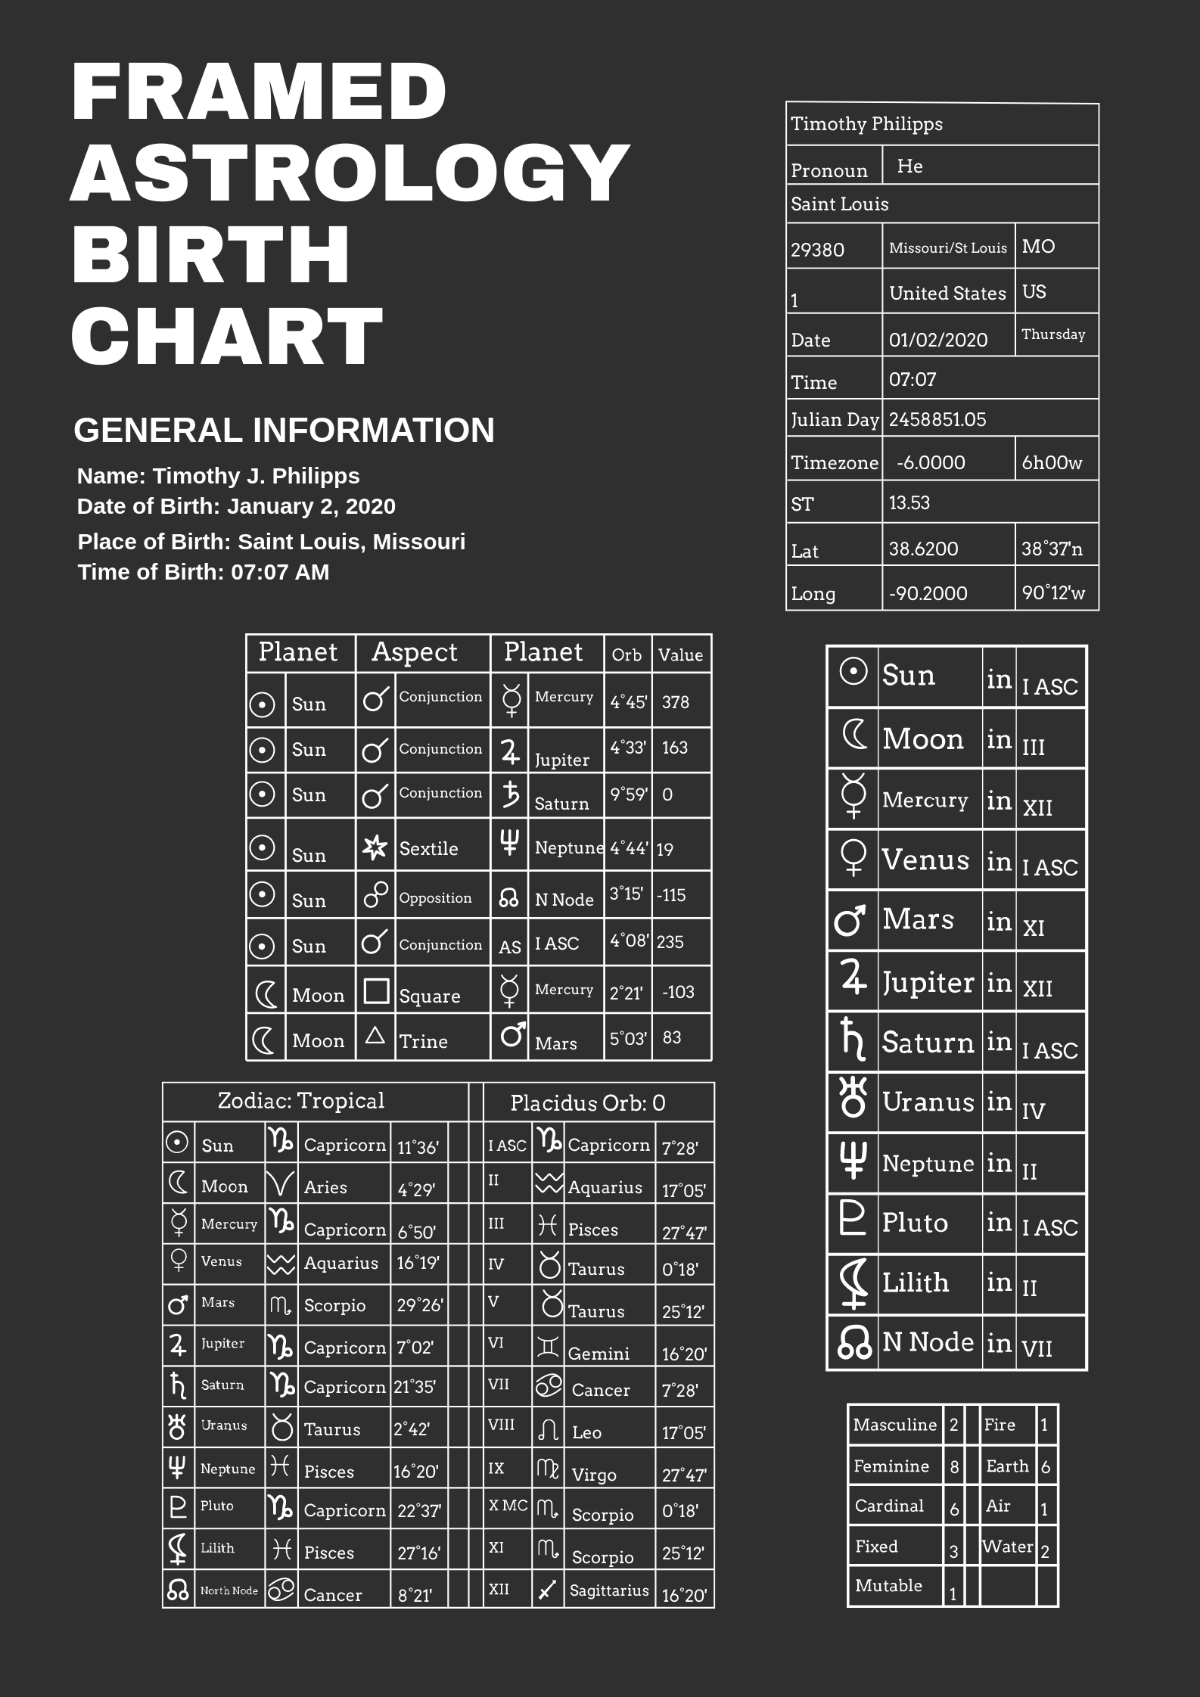 Framed Astrology Birth Chart